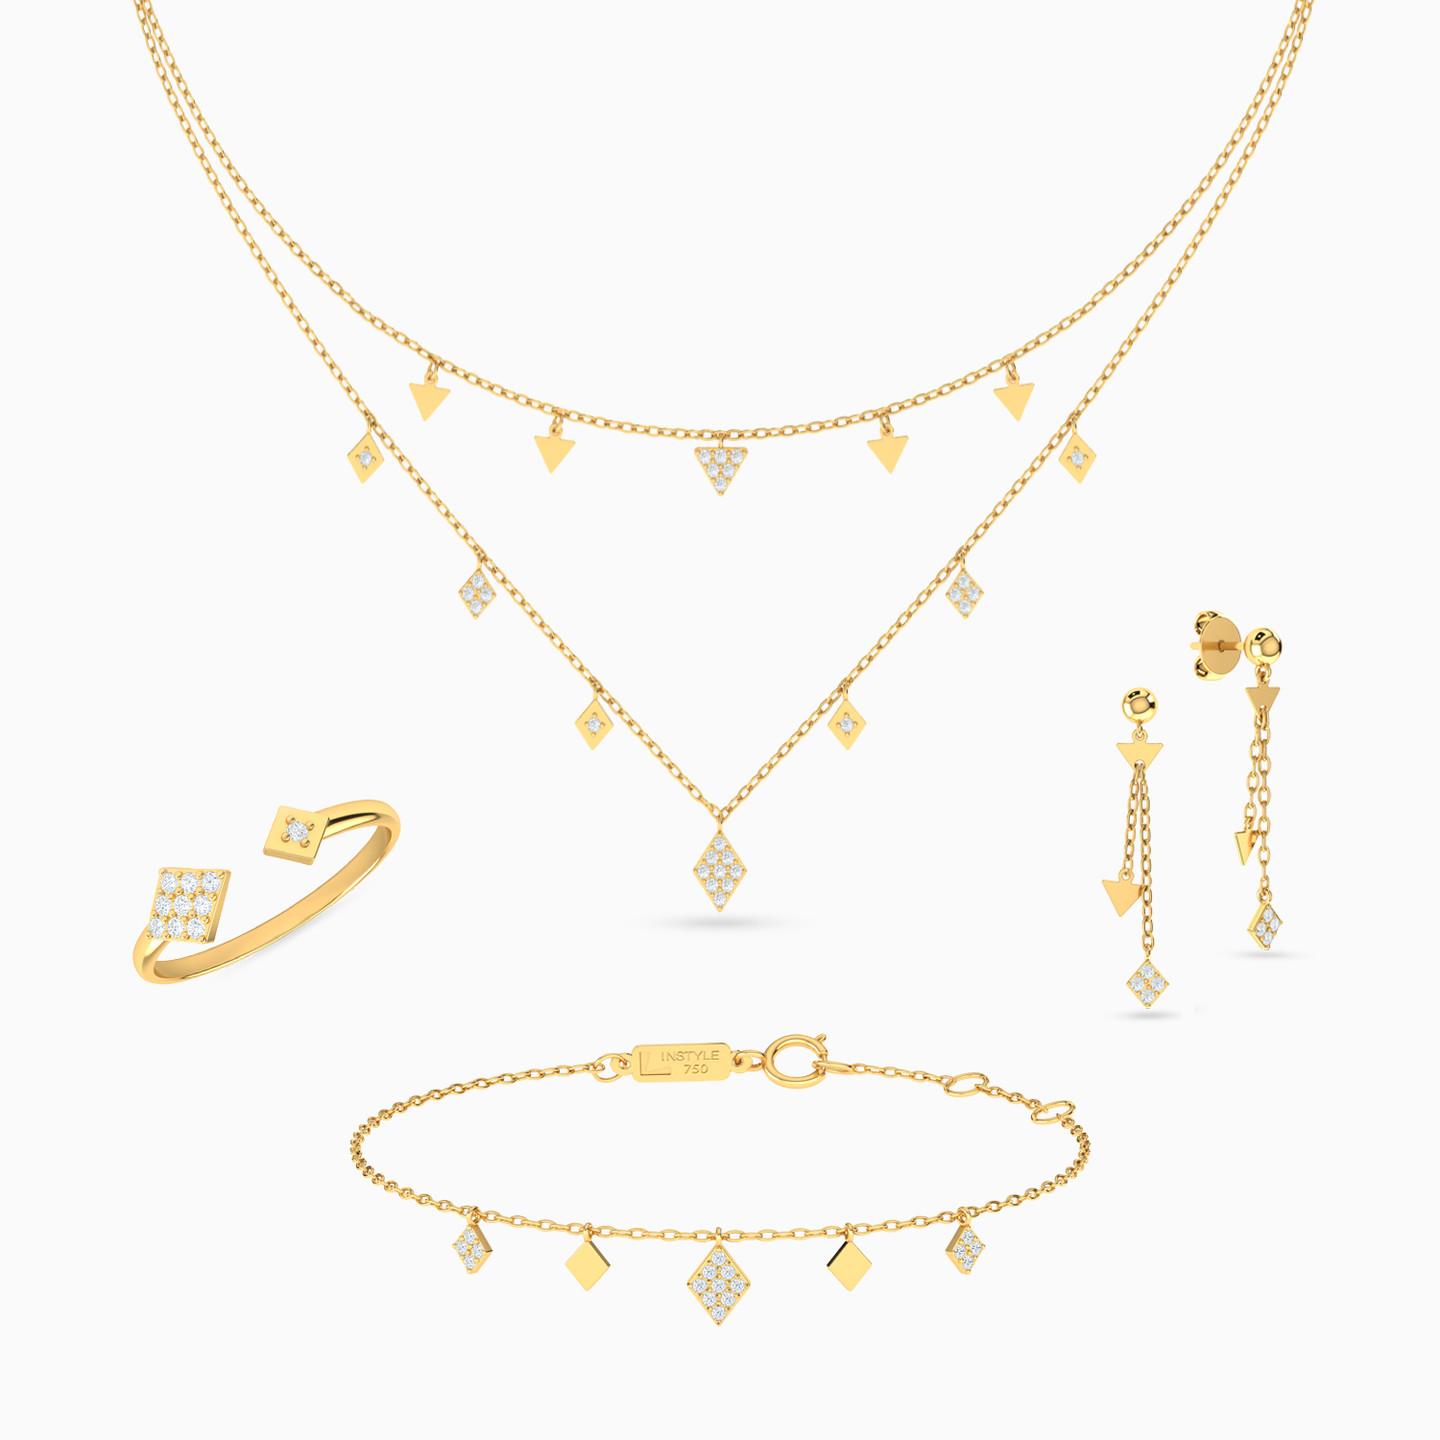 18K Gold Cubic Zirconia Jewelry Set - 4 Pieces